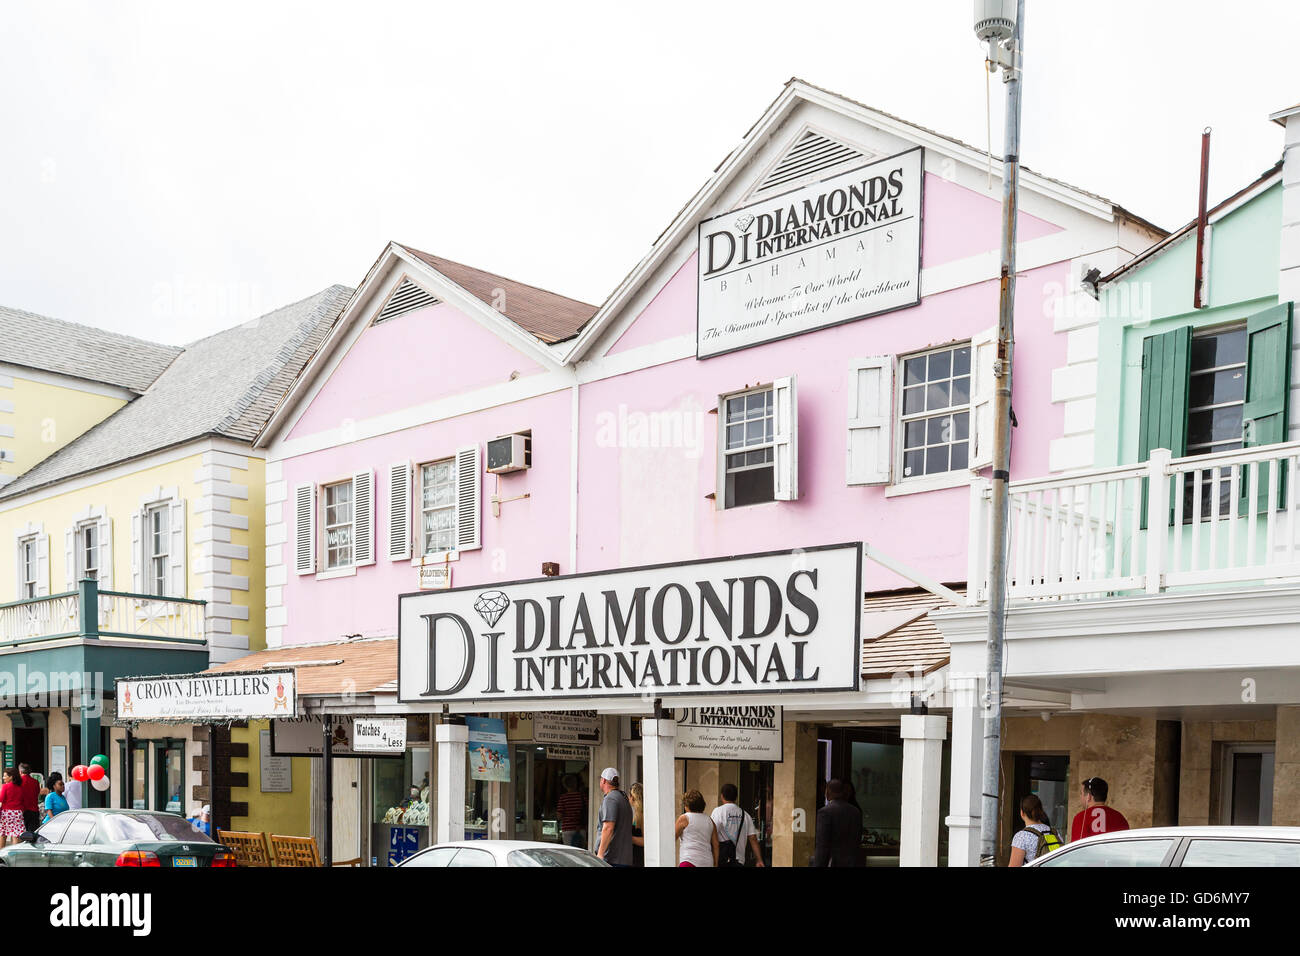 Diamonds international hi-res stock photography and images - Alamy